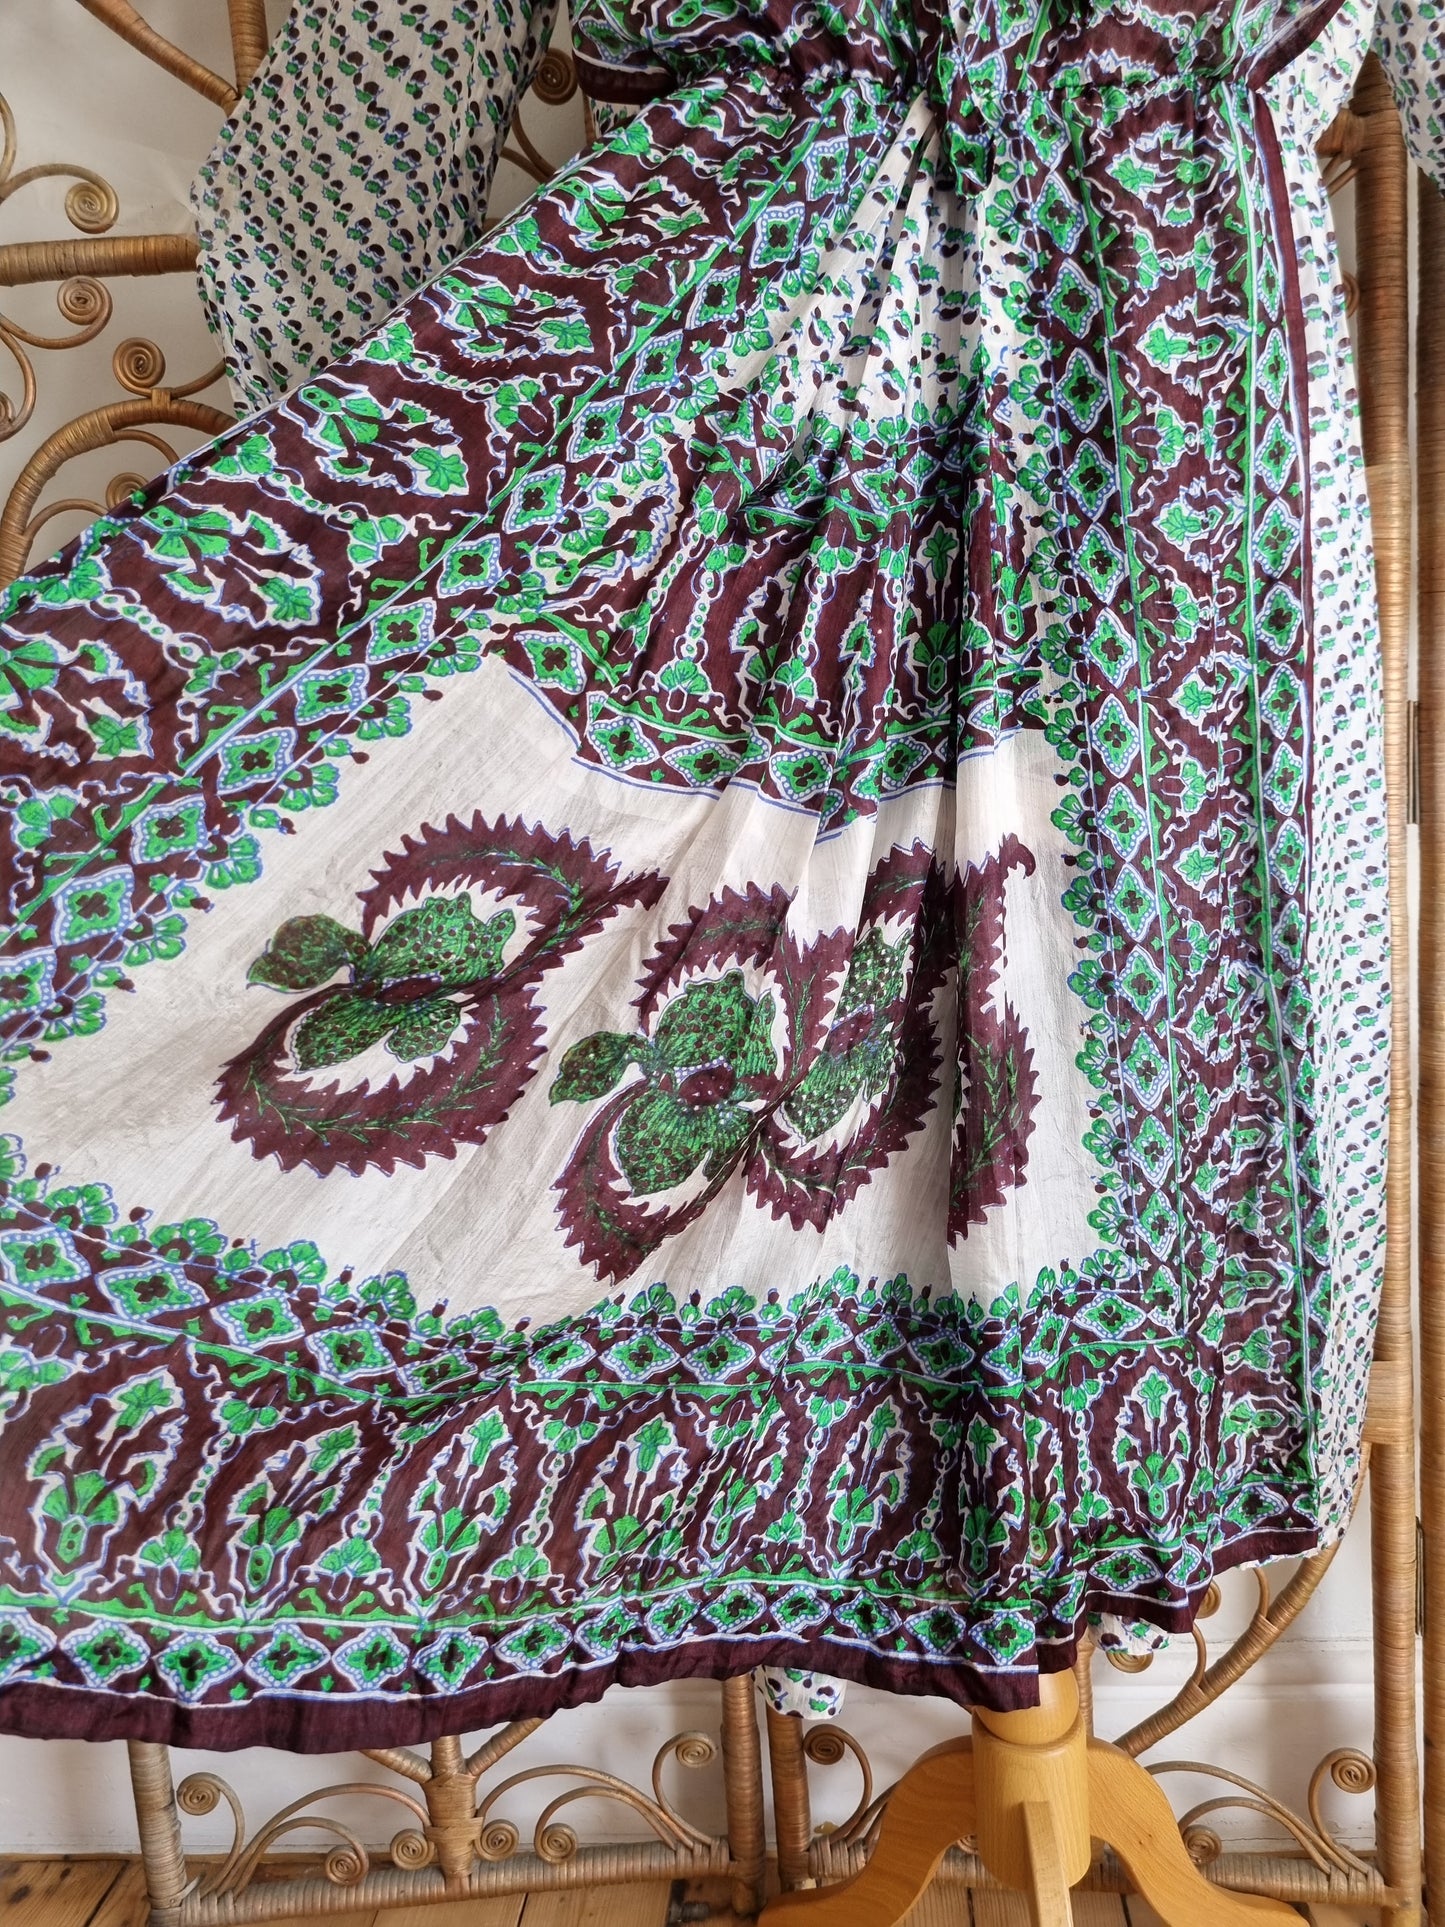 Vintage Indian silk dress L XL